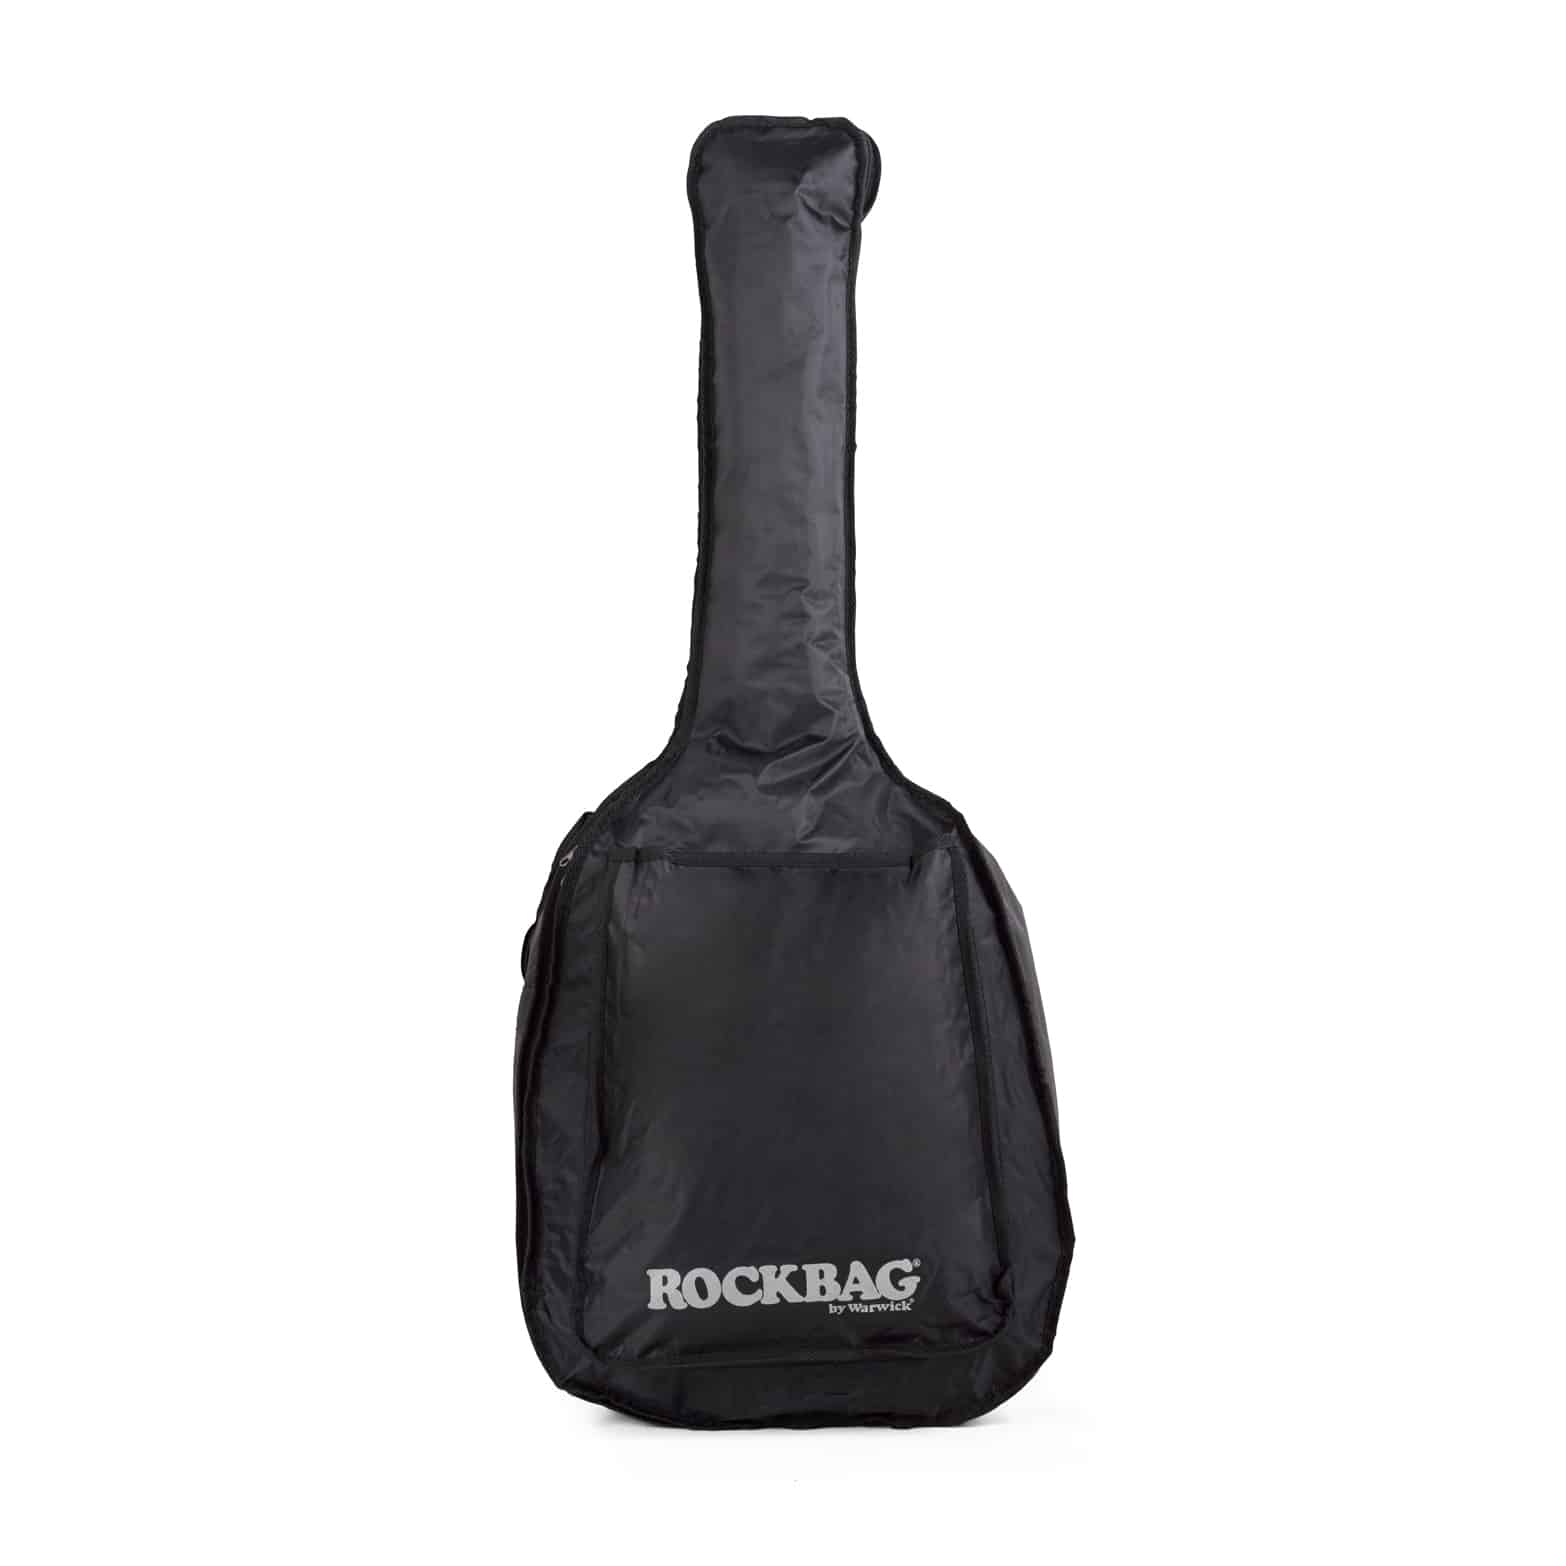 Rockbag Eco acoustic